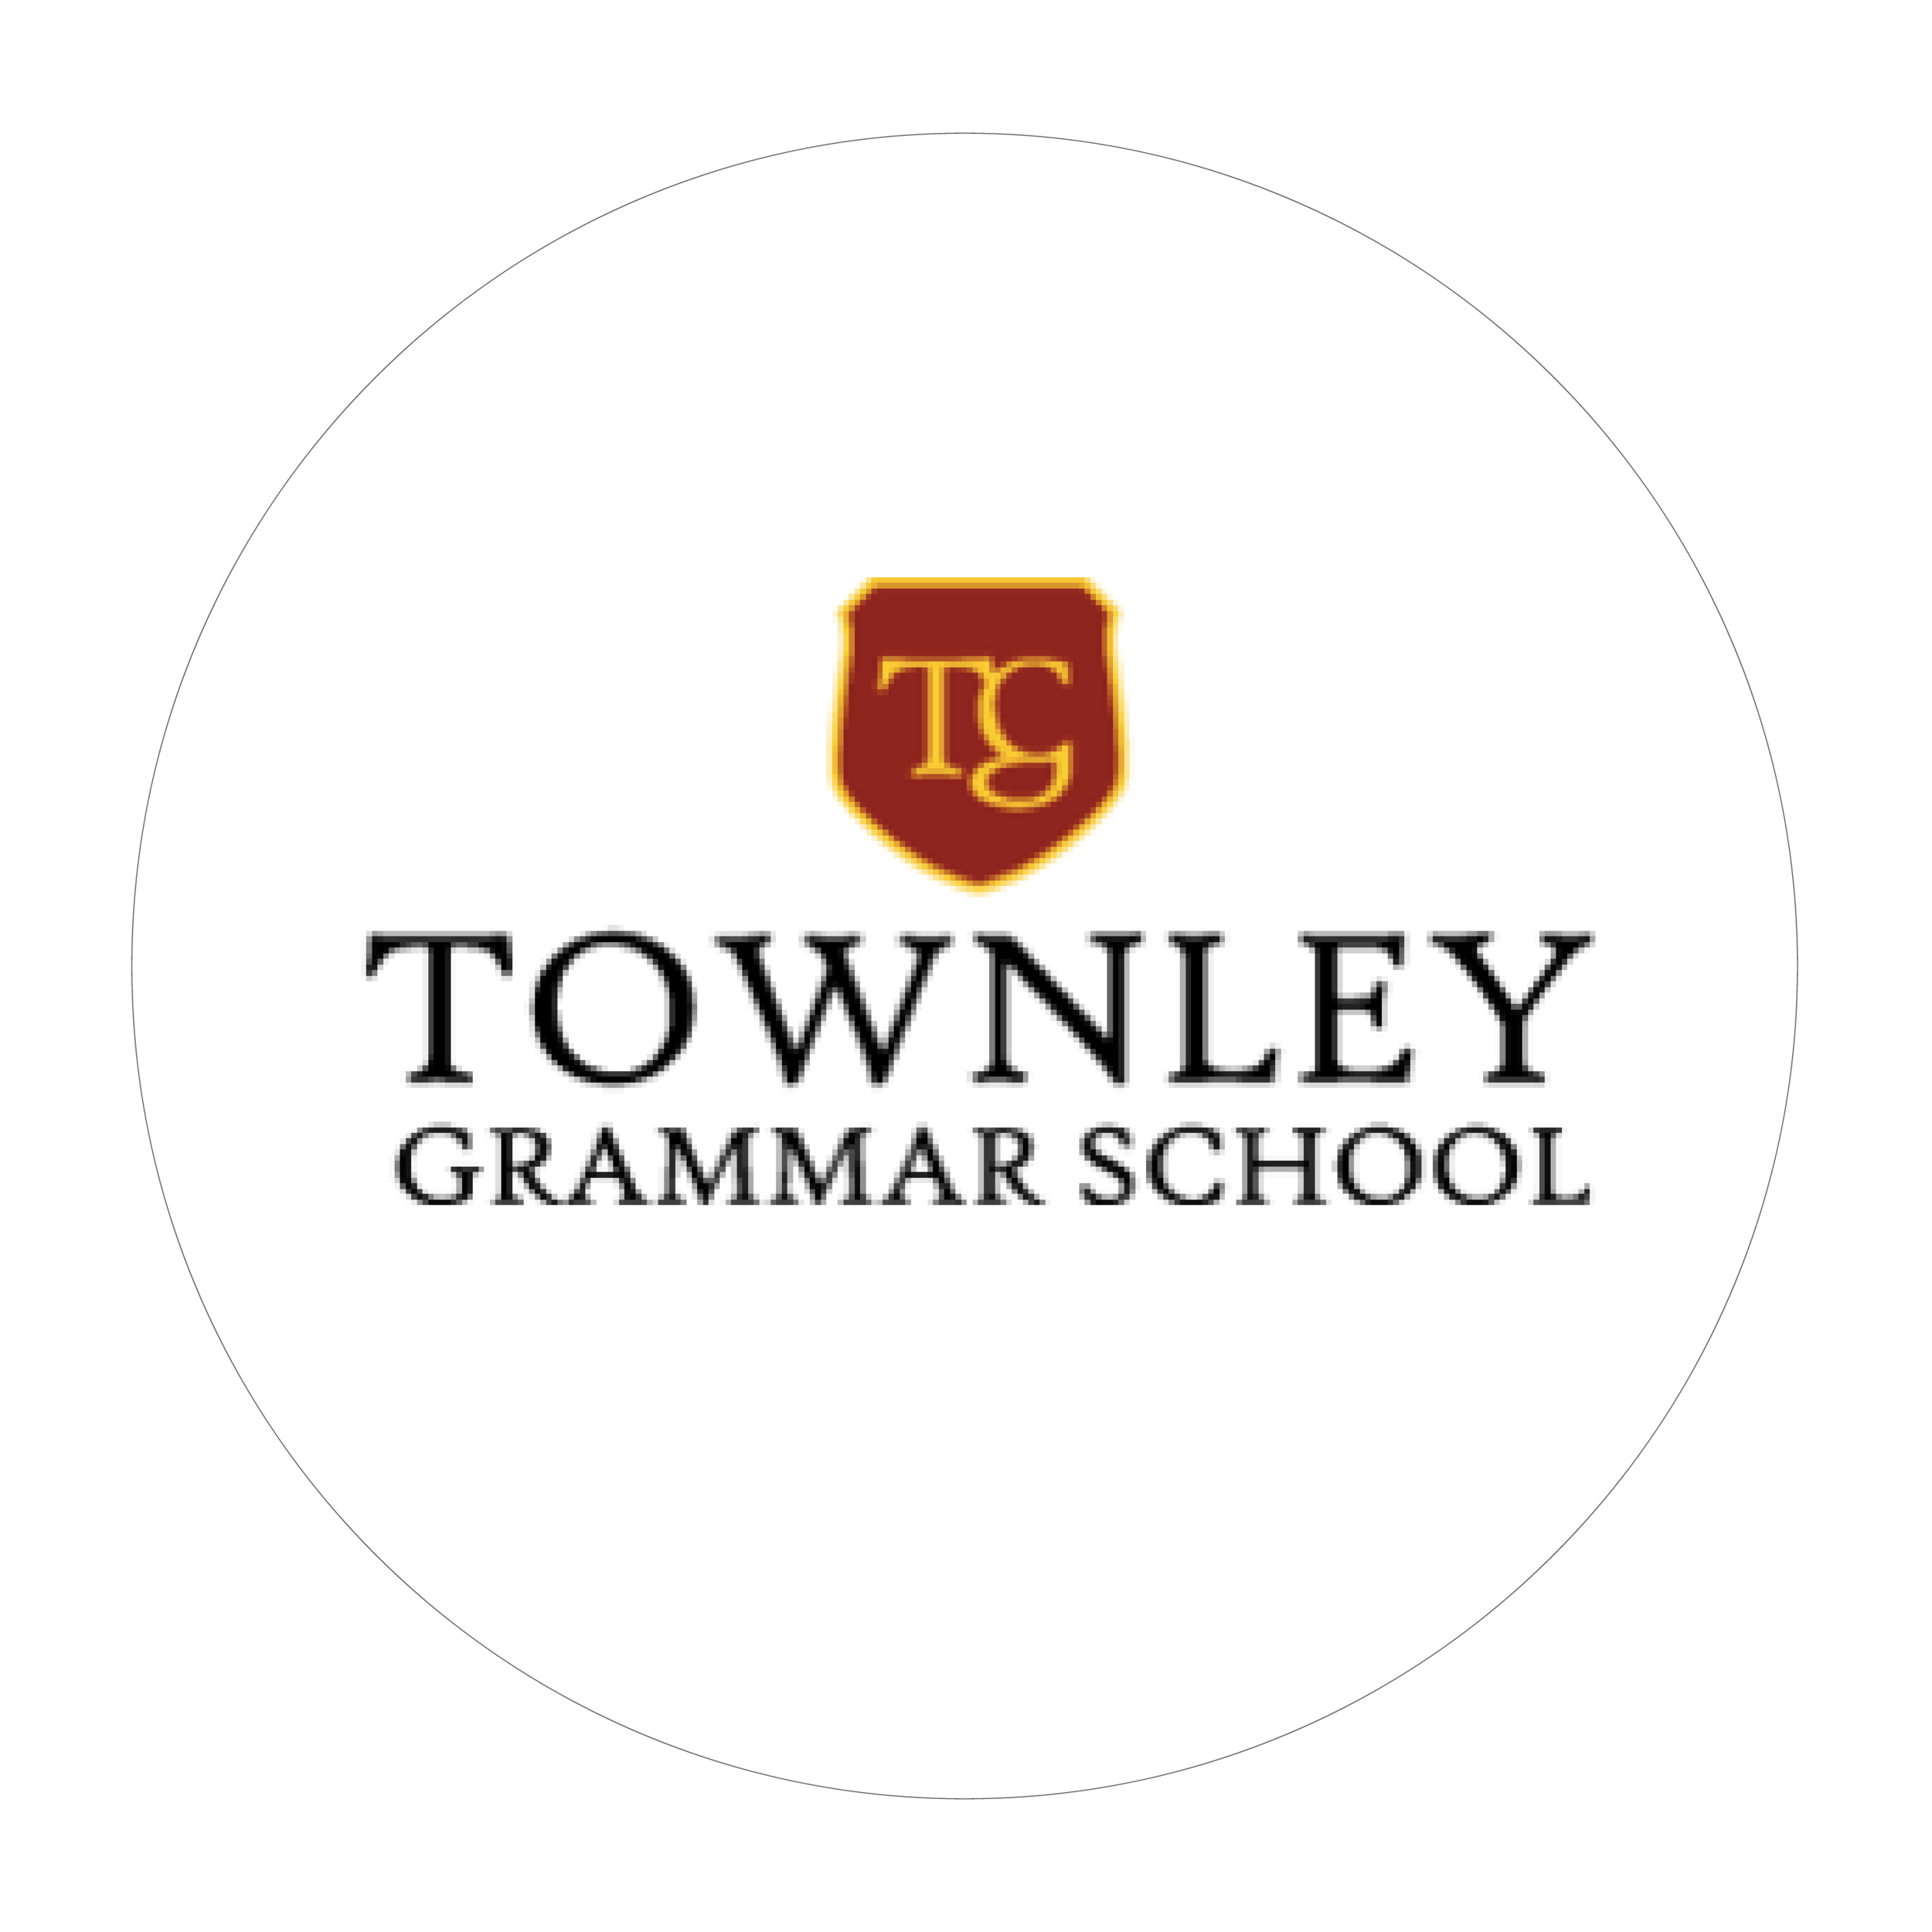 Townley Grammar School